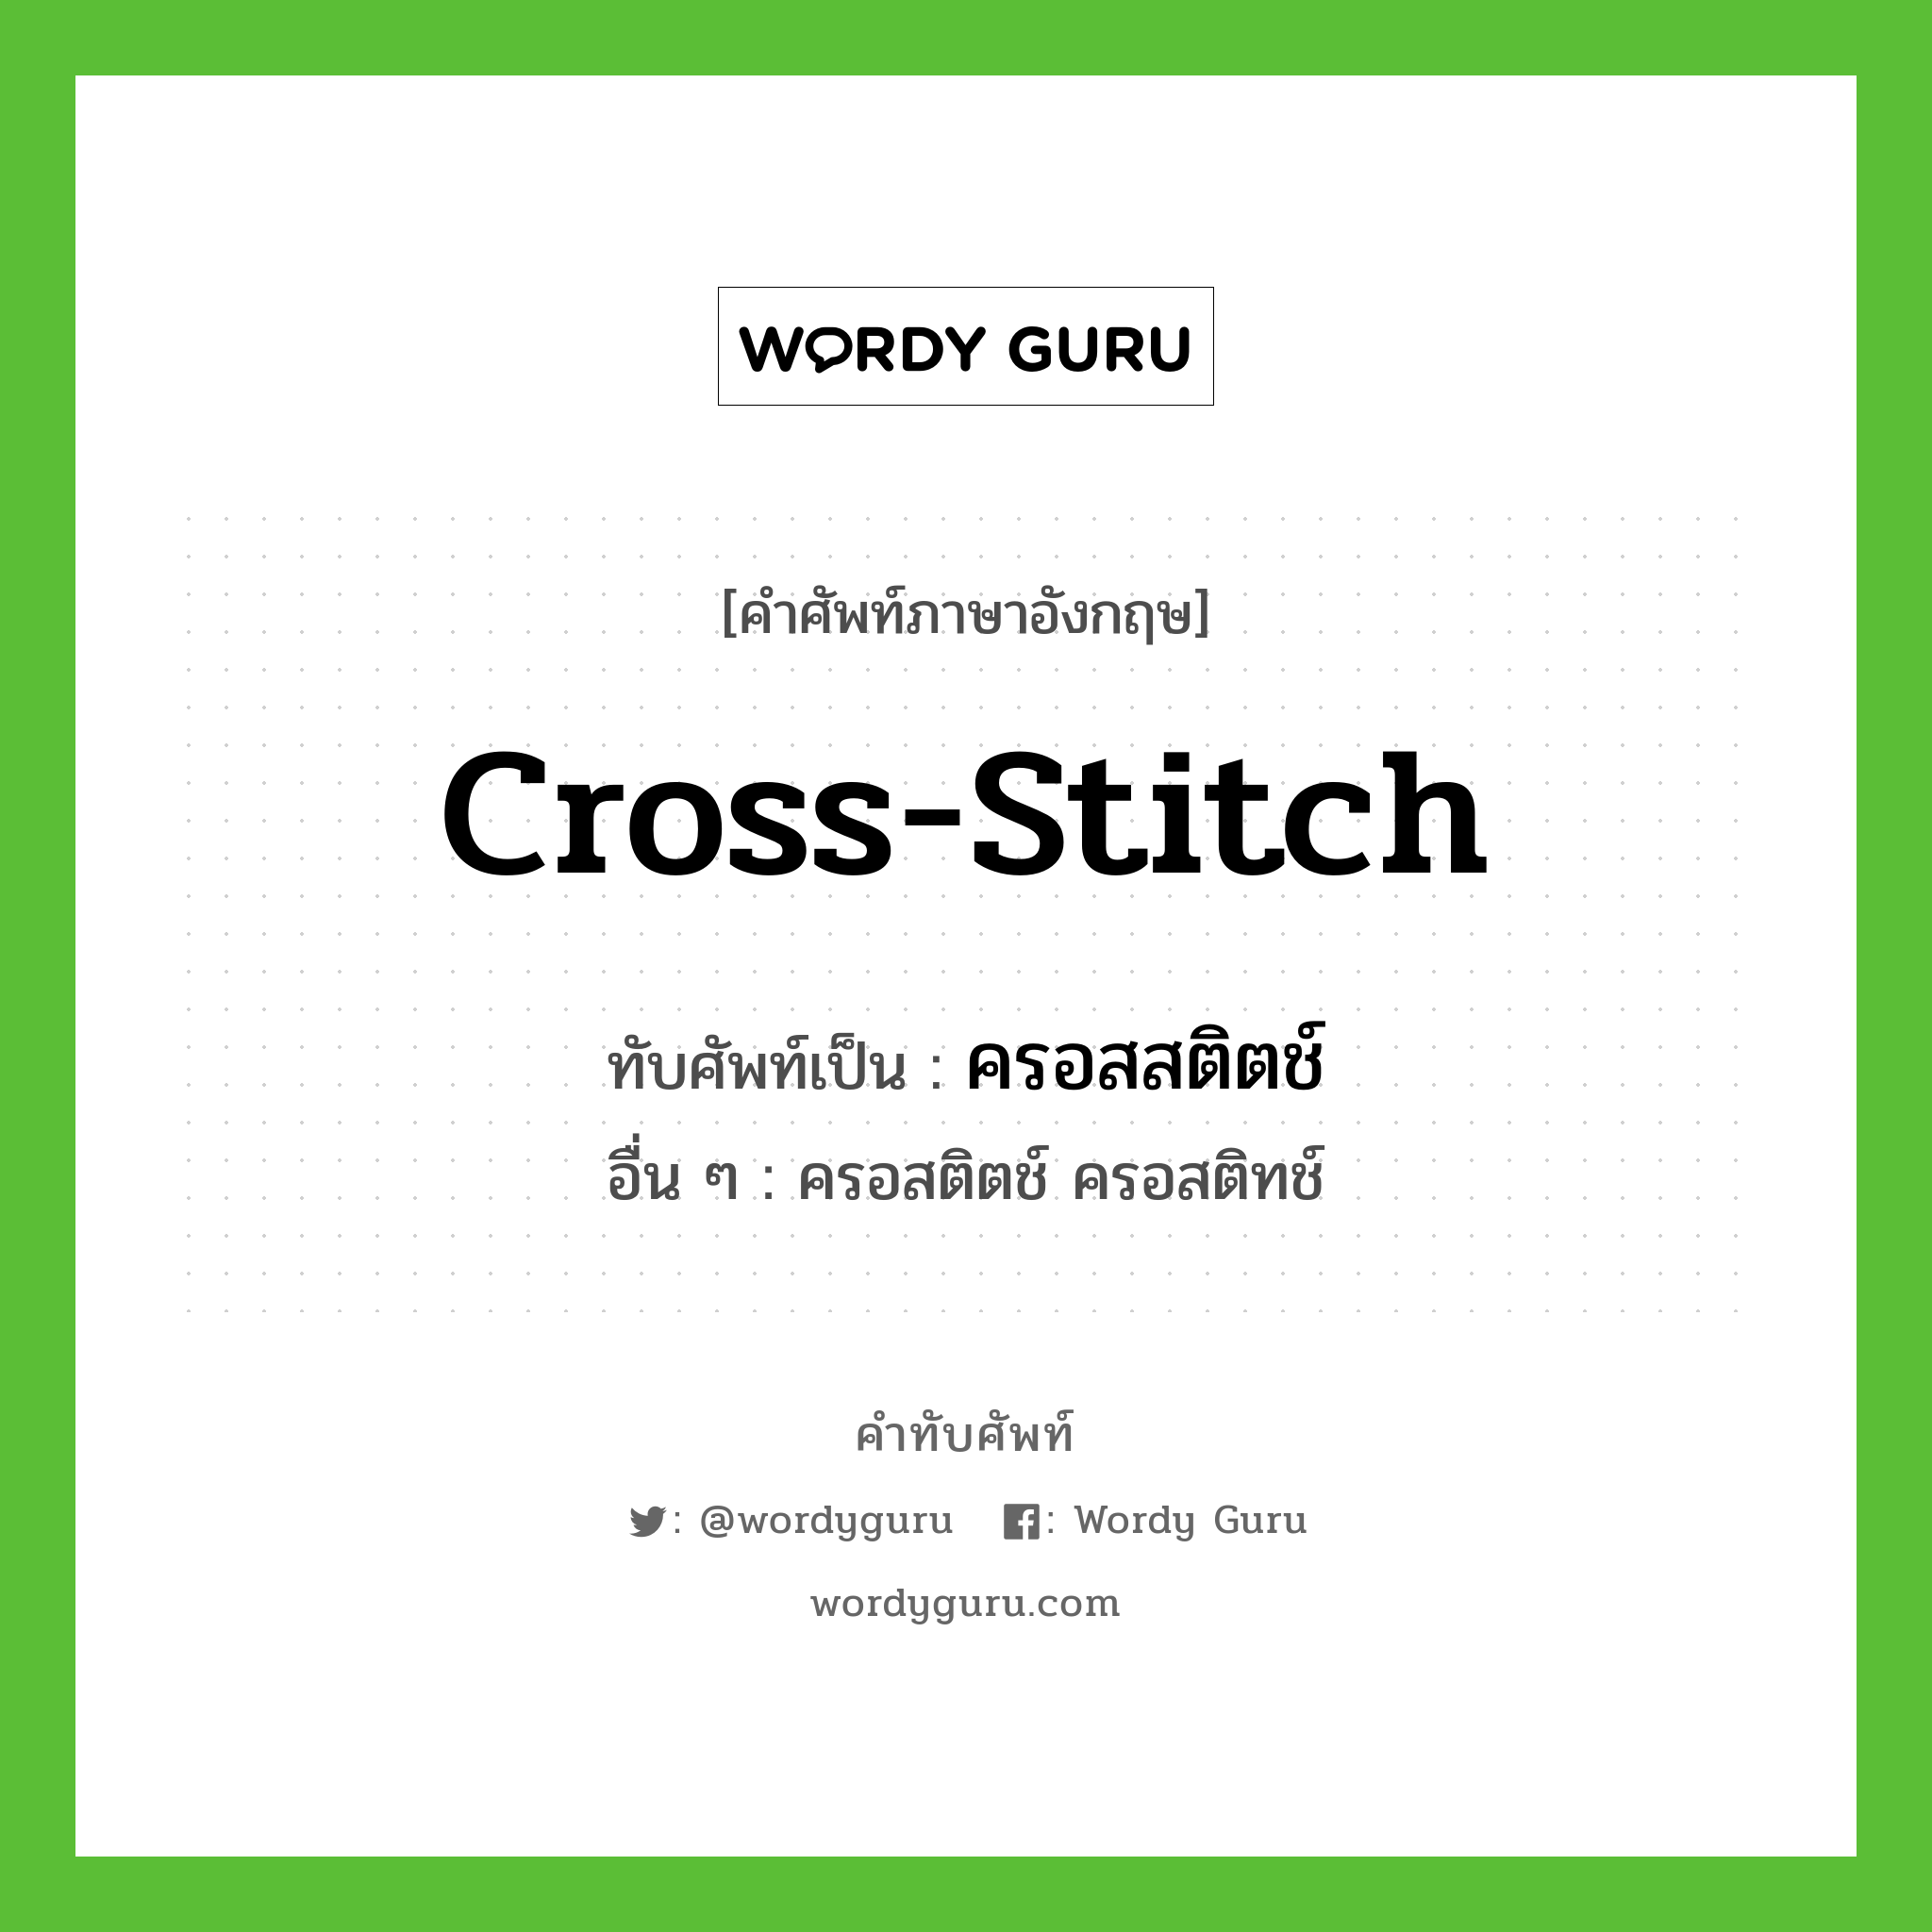 cross-stitch เขียนเป็นคำไทยว่าอะไร?, คำศัพท์ภาษาอังกฤษ cross-stitch ทับศัพท์เป็น ครอสสติตช์ อื่น ๆ ครอสติตช์ ครอสติทช์